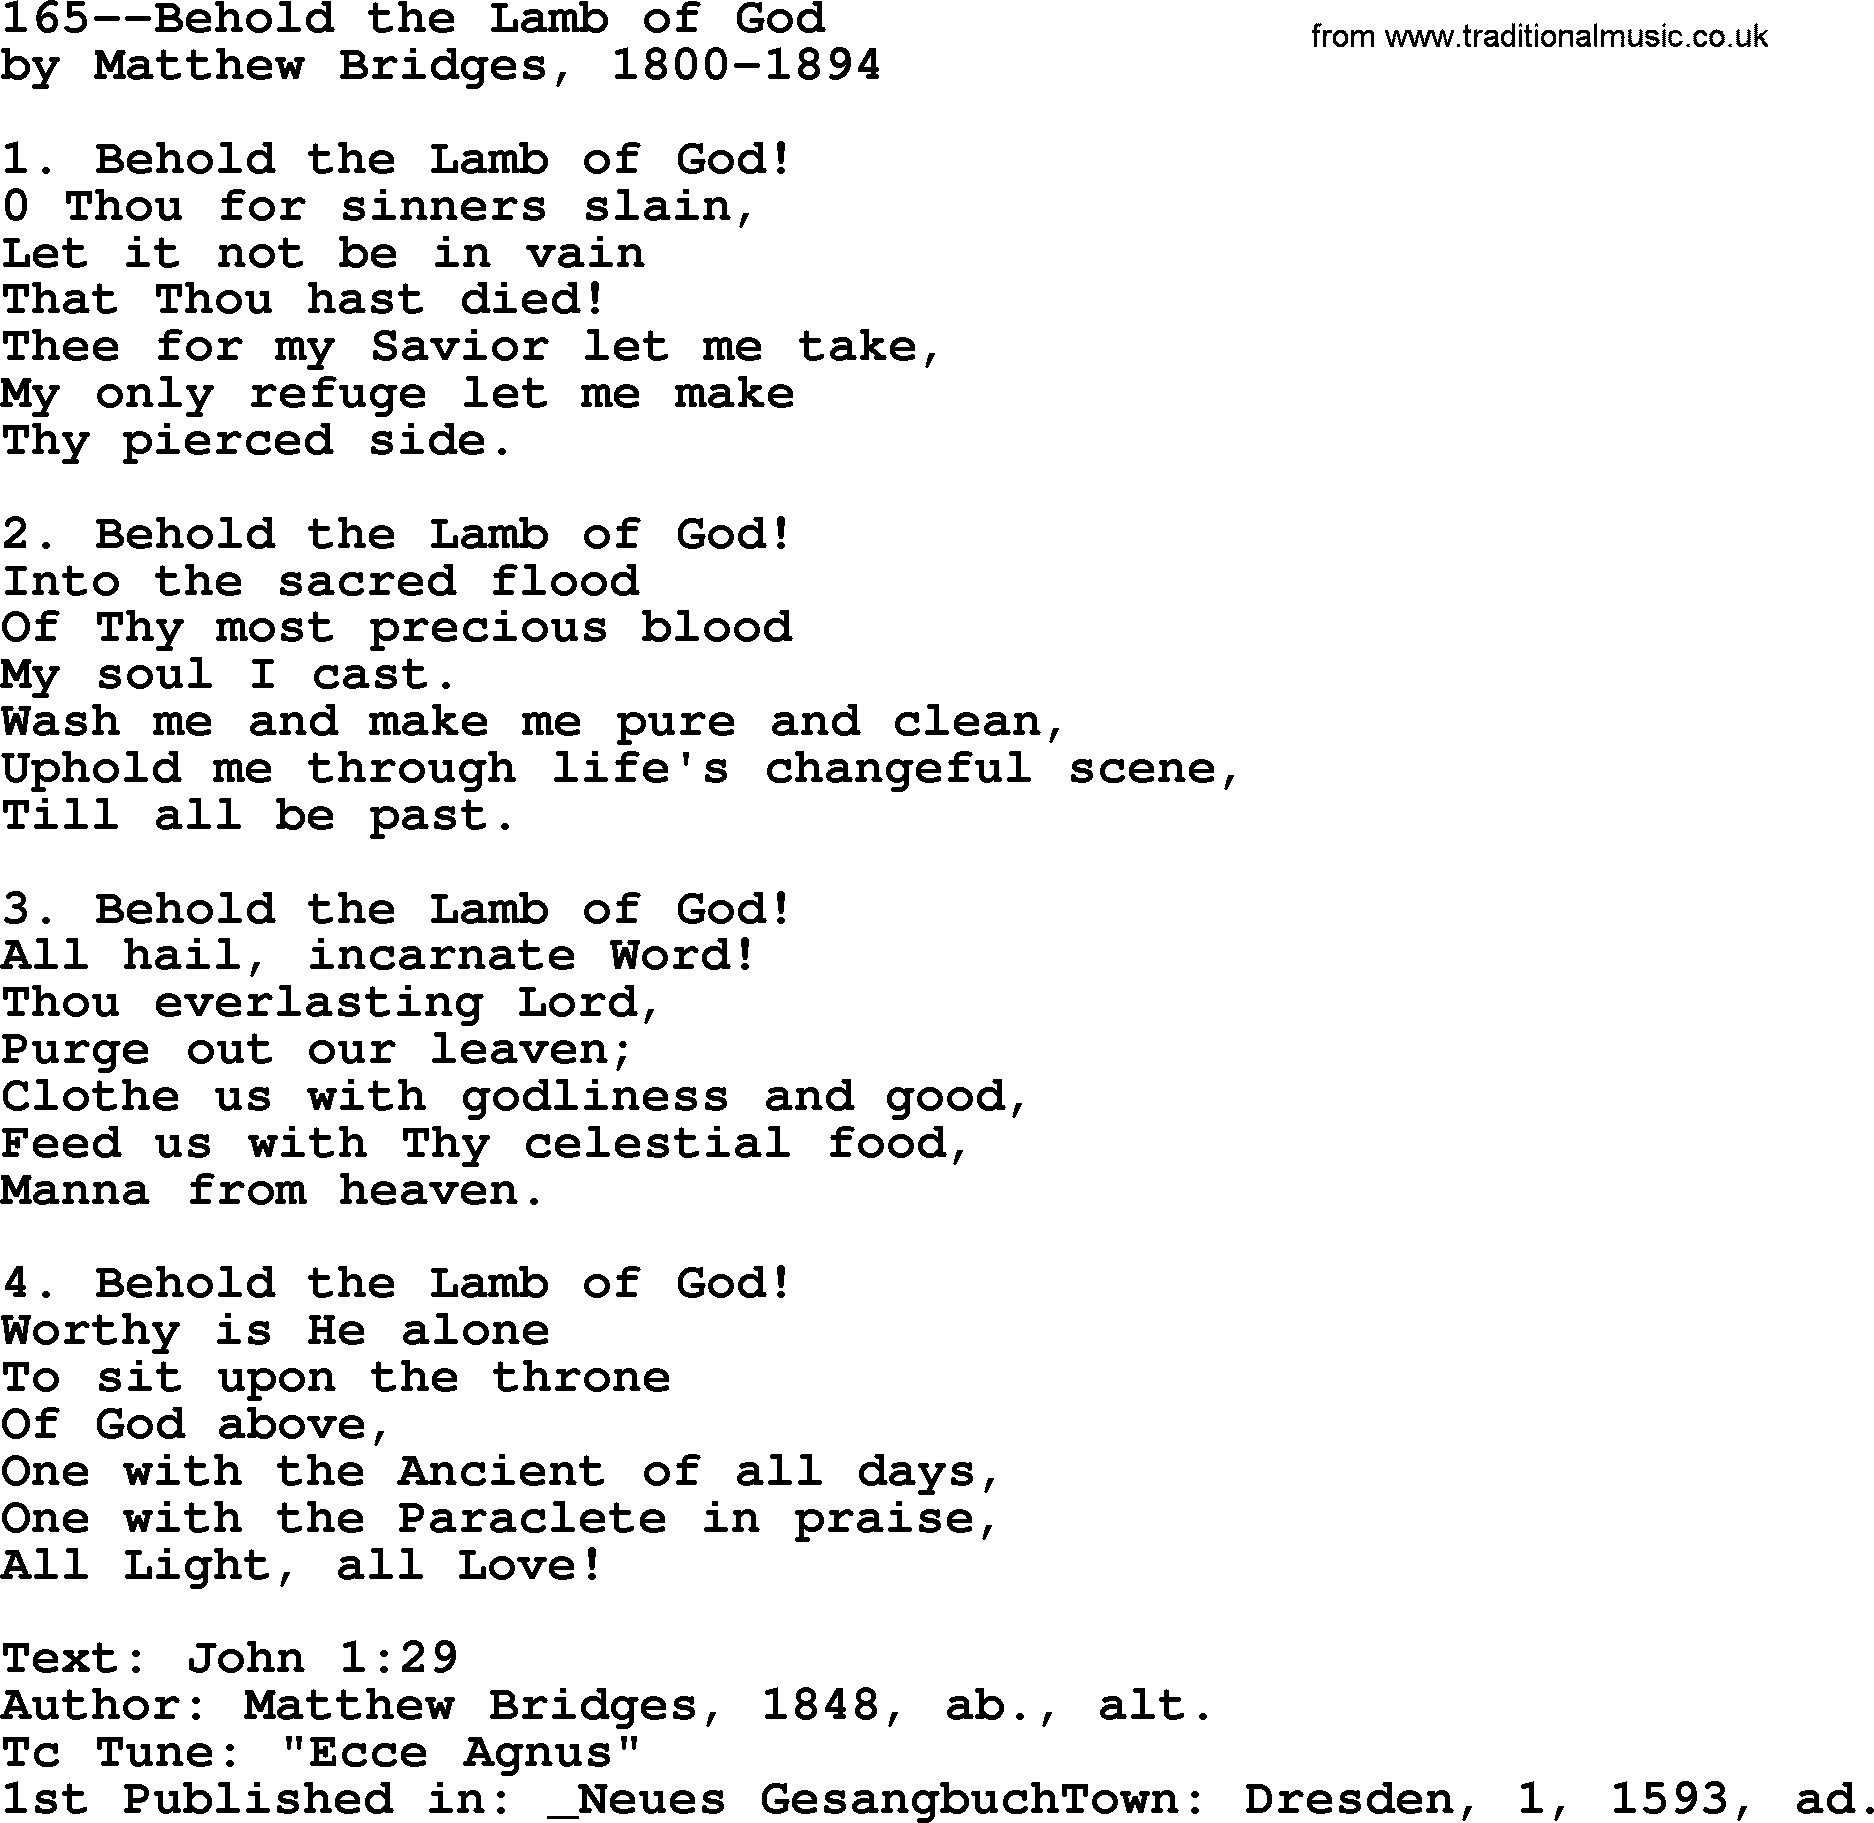 Lutheran Hymn: 165--Behold the Lamb of God.txt lyrics with PDF